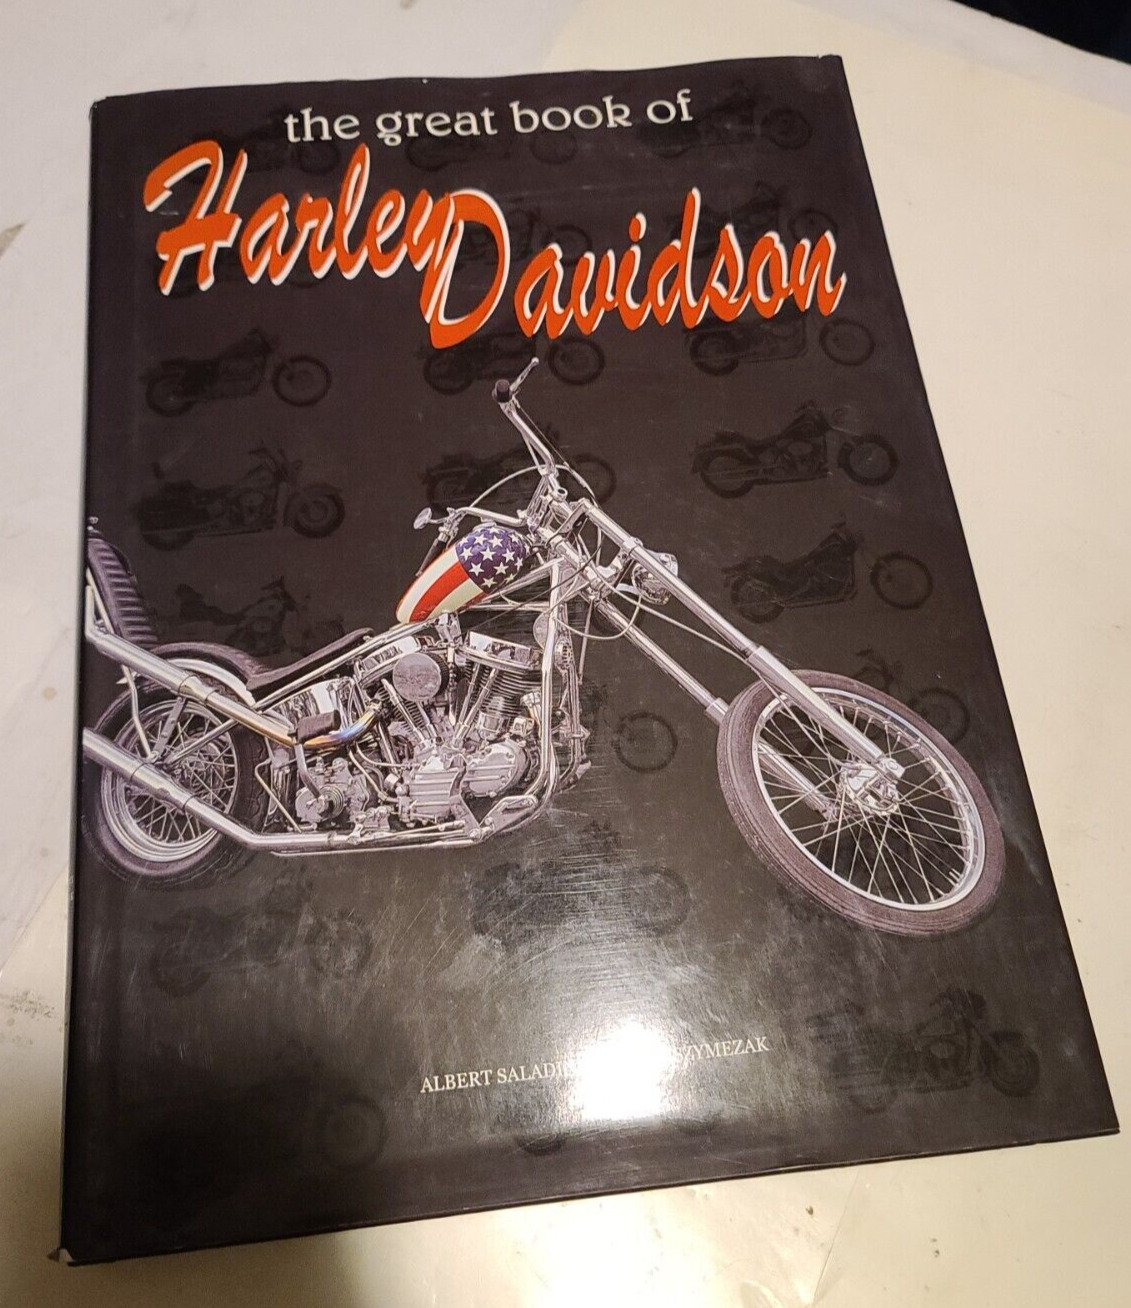 The Great Book Of Harley Davidson Albert Saladini Pascal Szymezak Hardcover